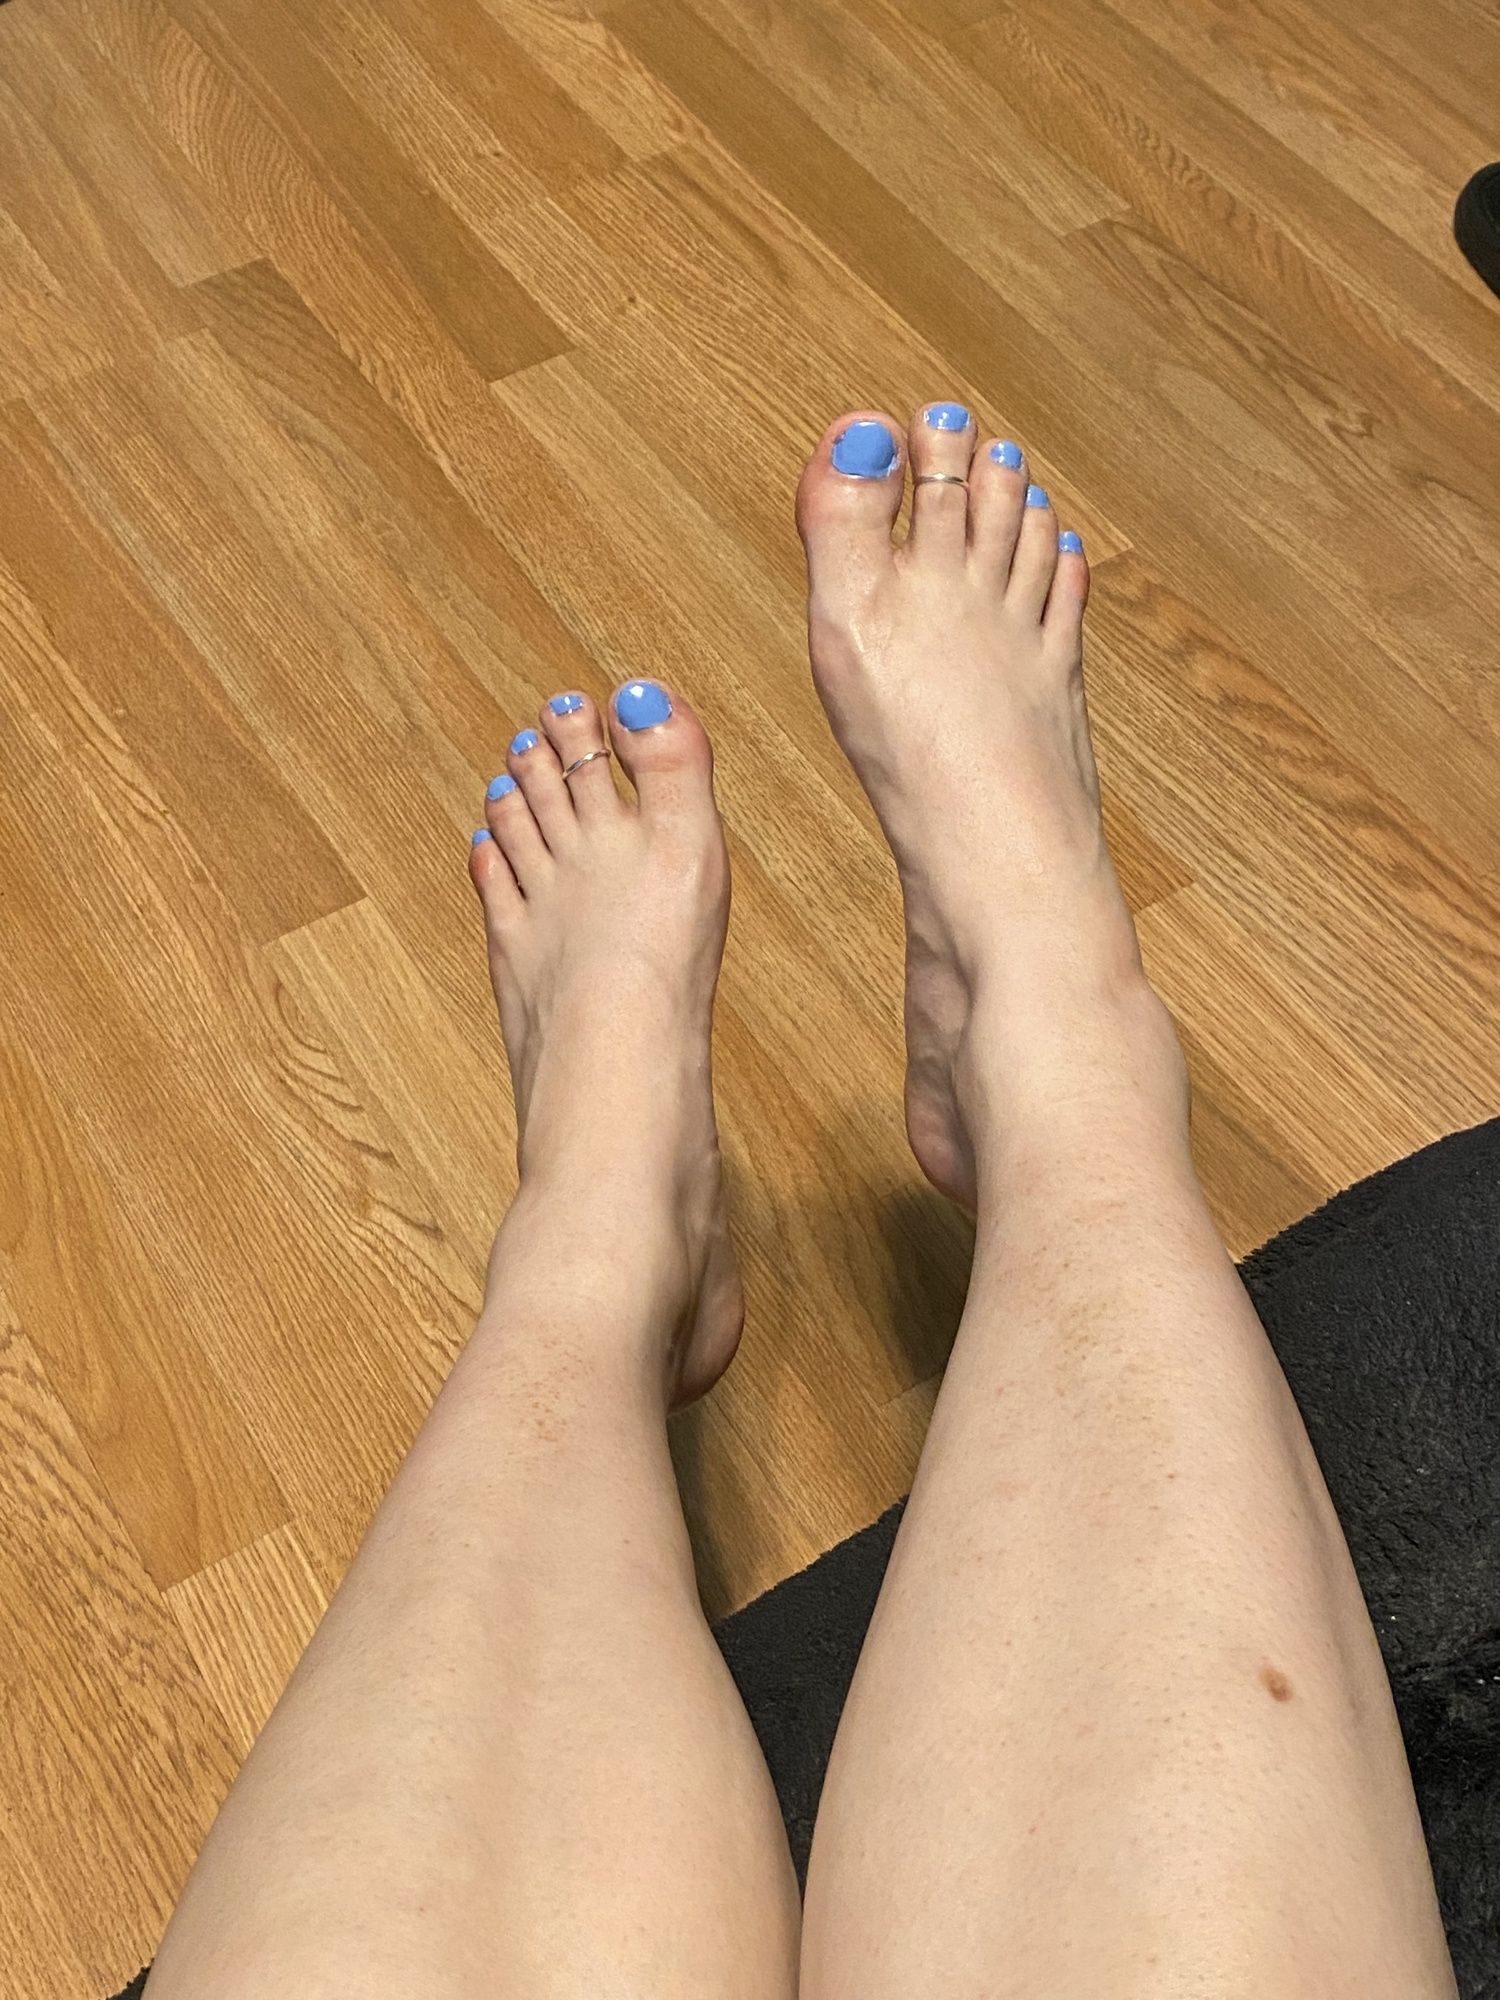 Pretty Feet and Toe Rings #4